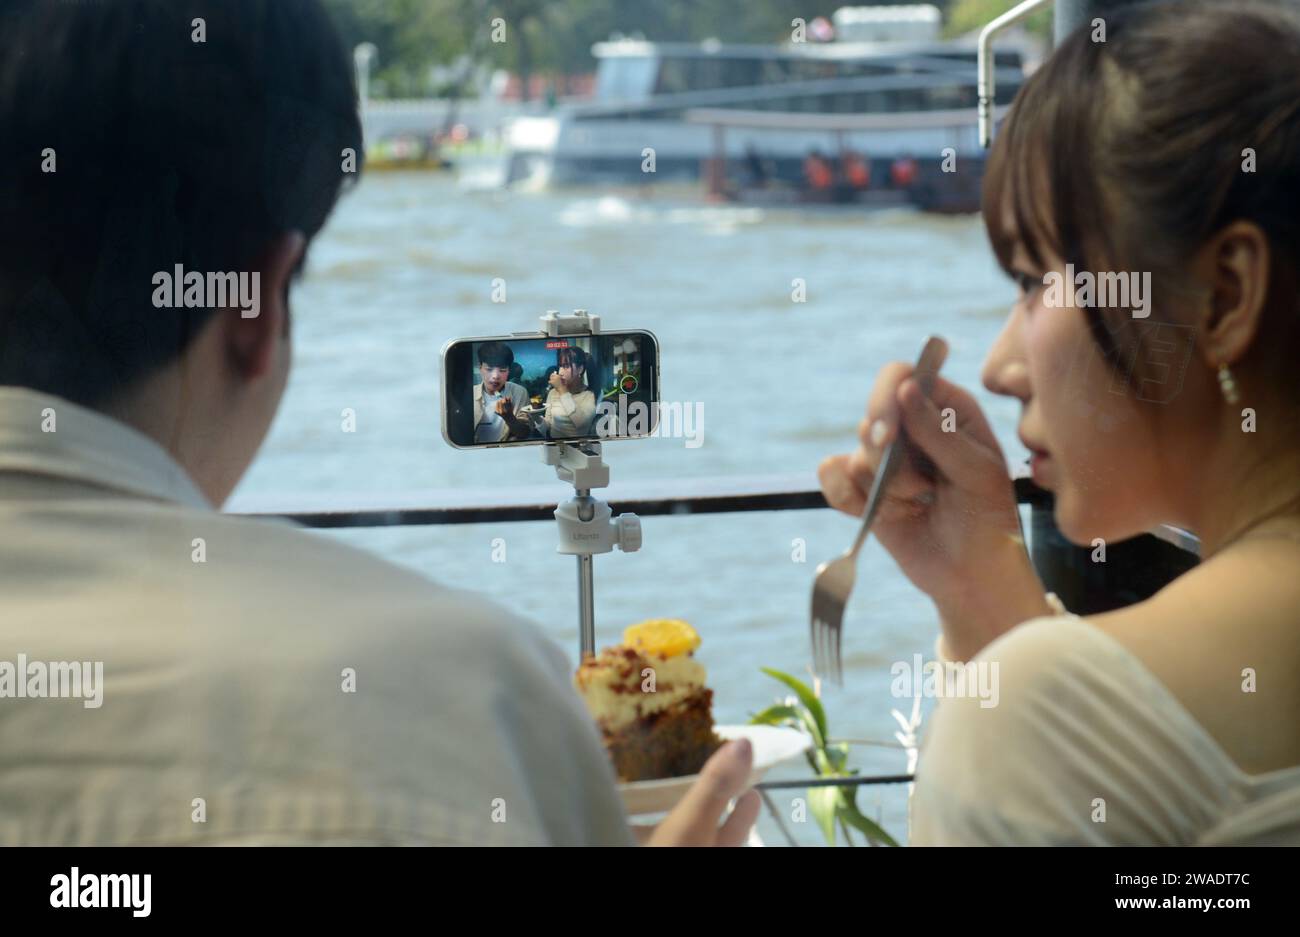 A Gen Z Asian couple filming themselves for an online vlog on their social media platform. Bangkok, Thailand. Stock Photo